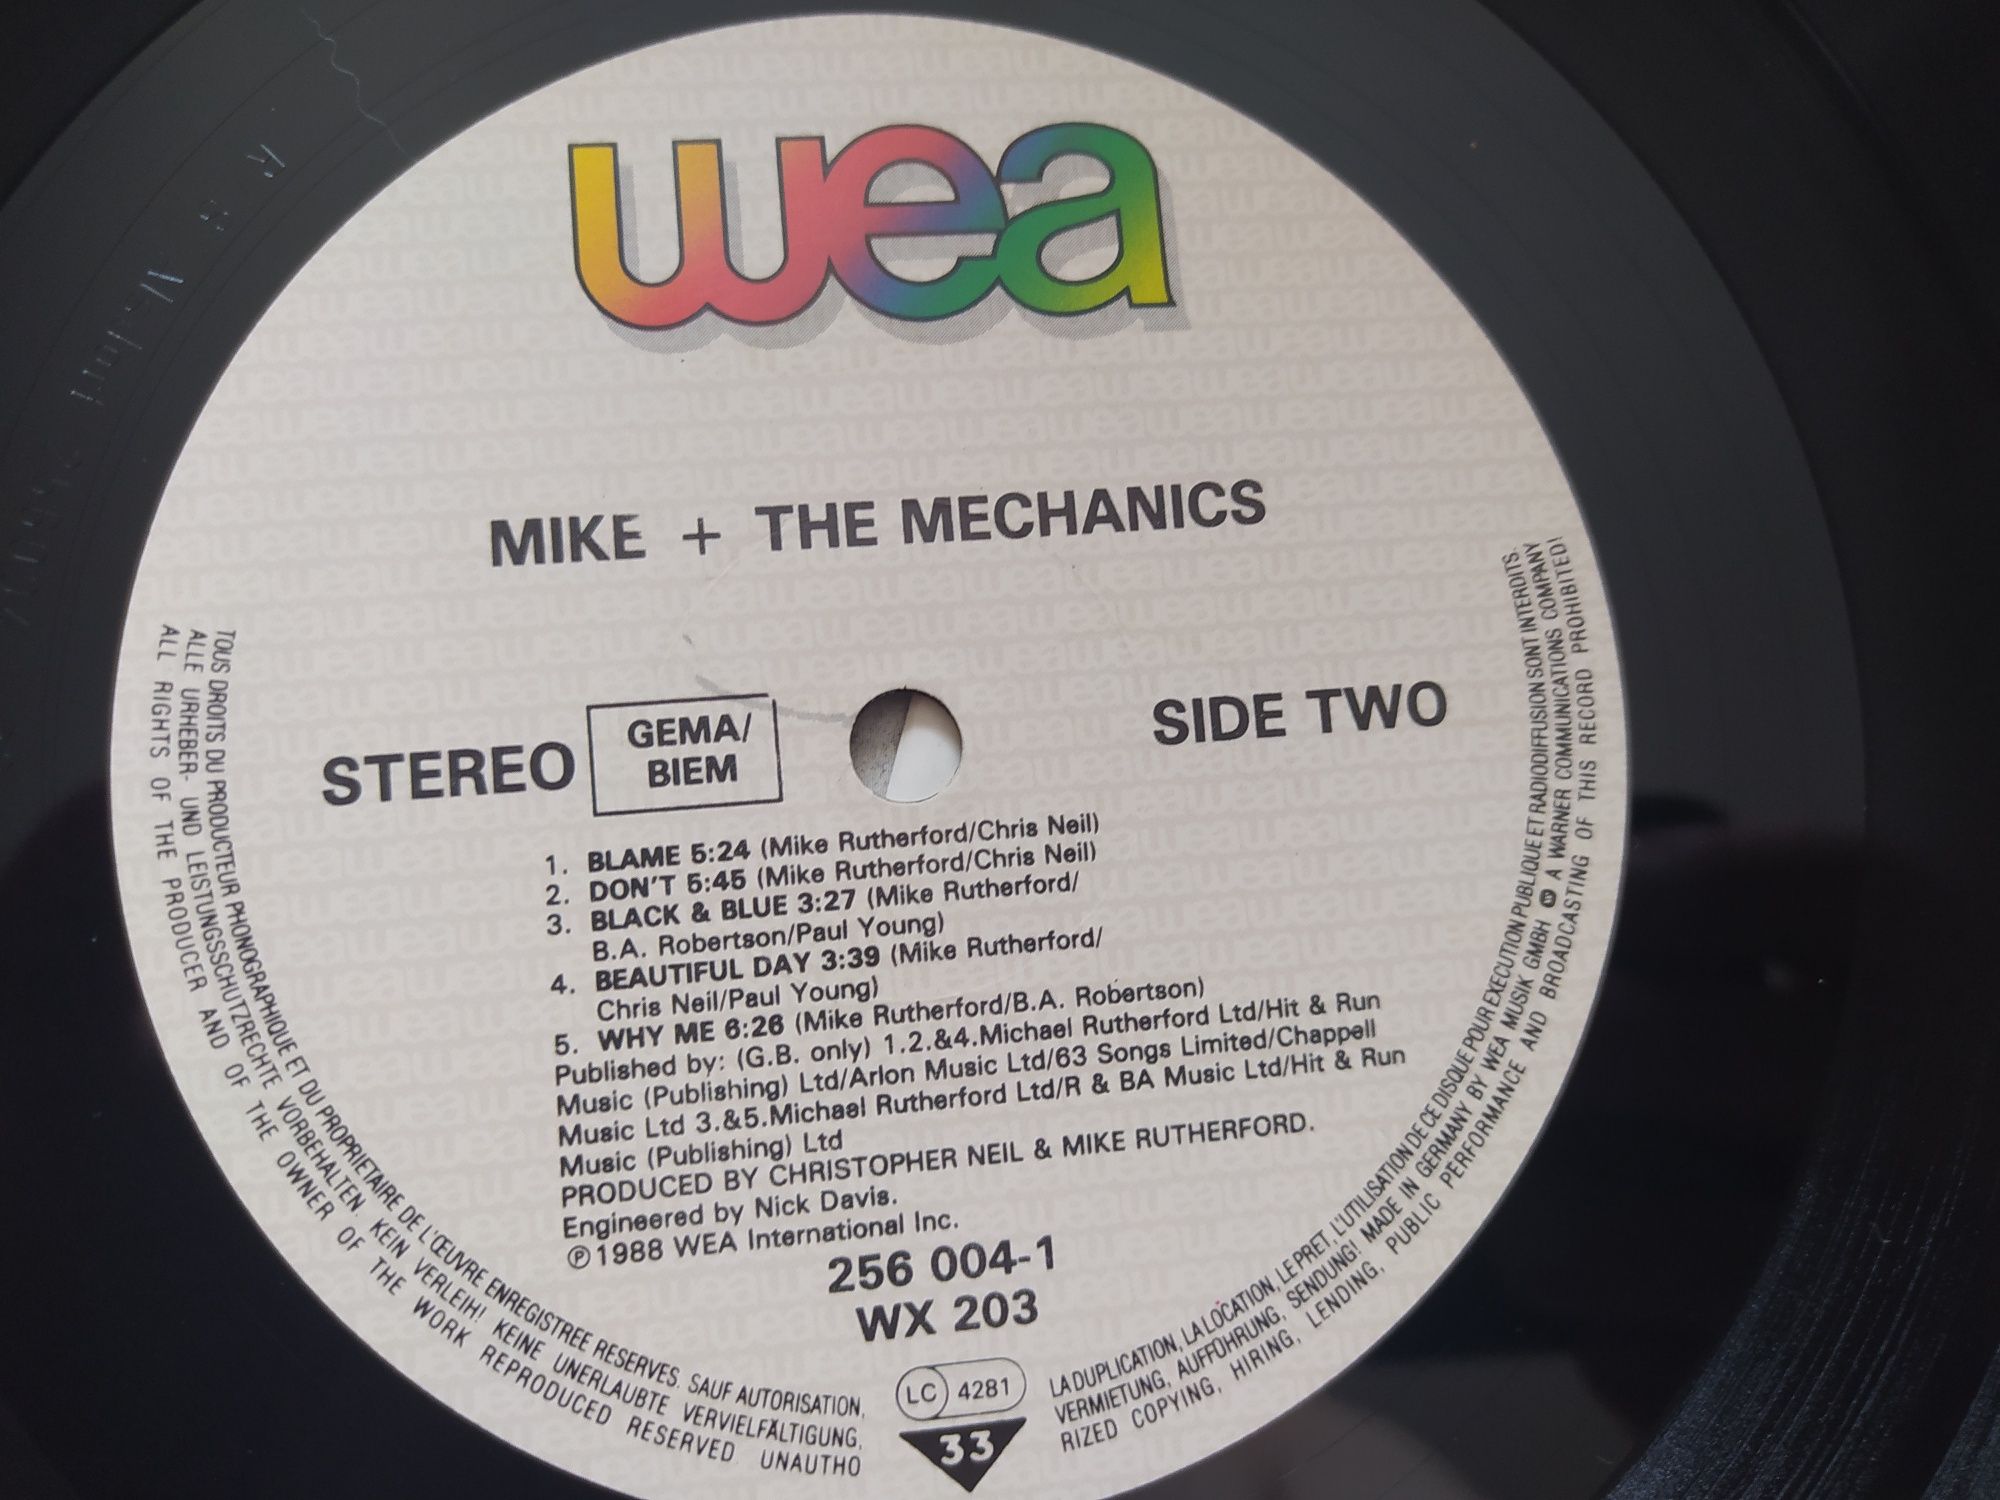 M1ke + The Mechan1c5 – Living Years EX